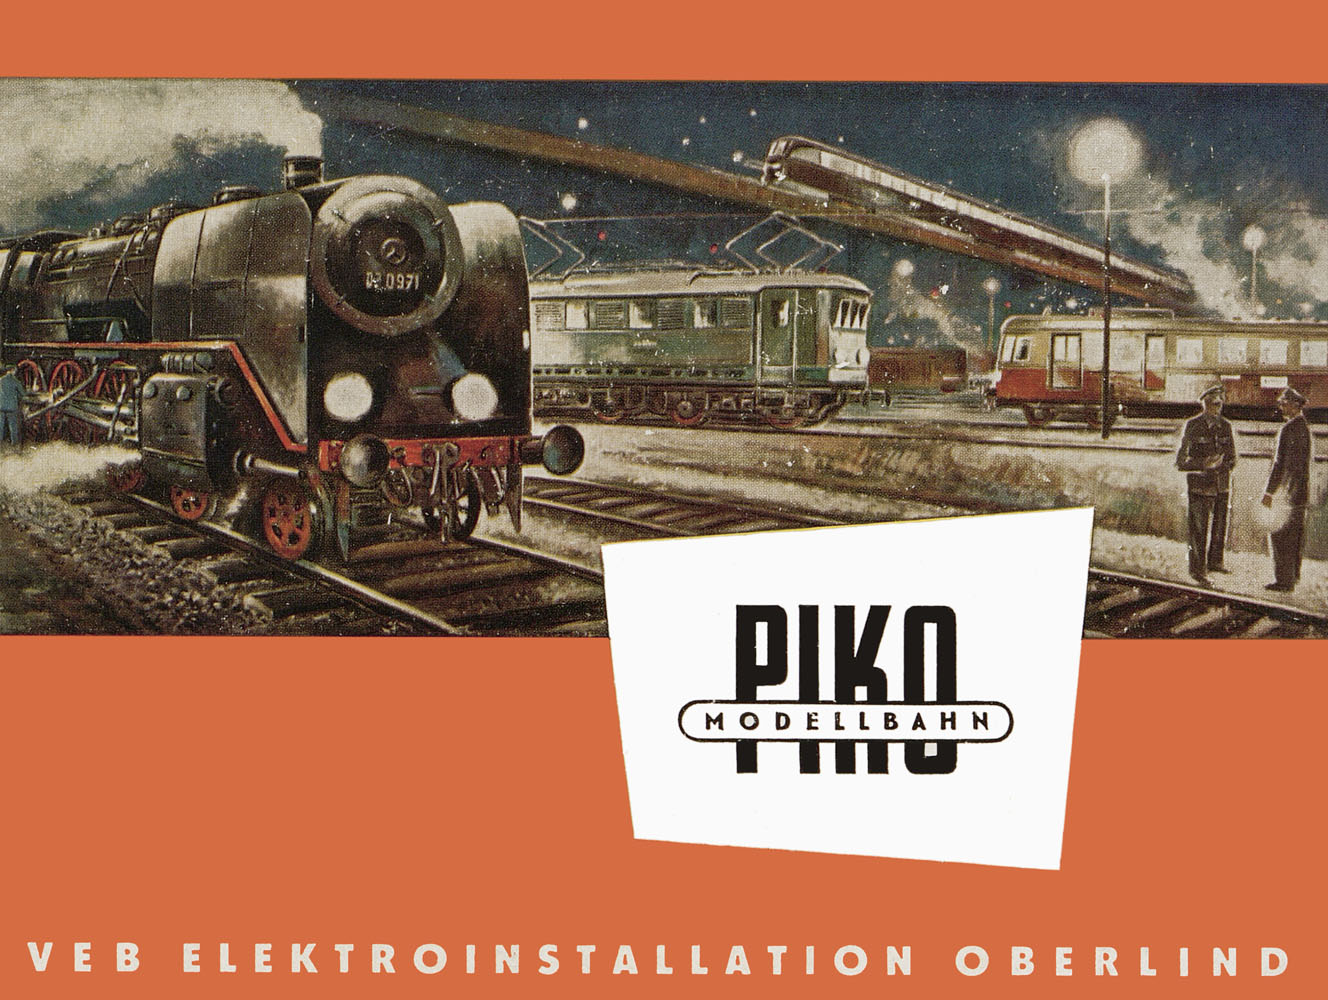 Piko-Modellbahn Katalog von 1957